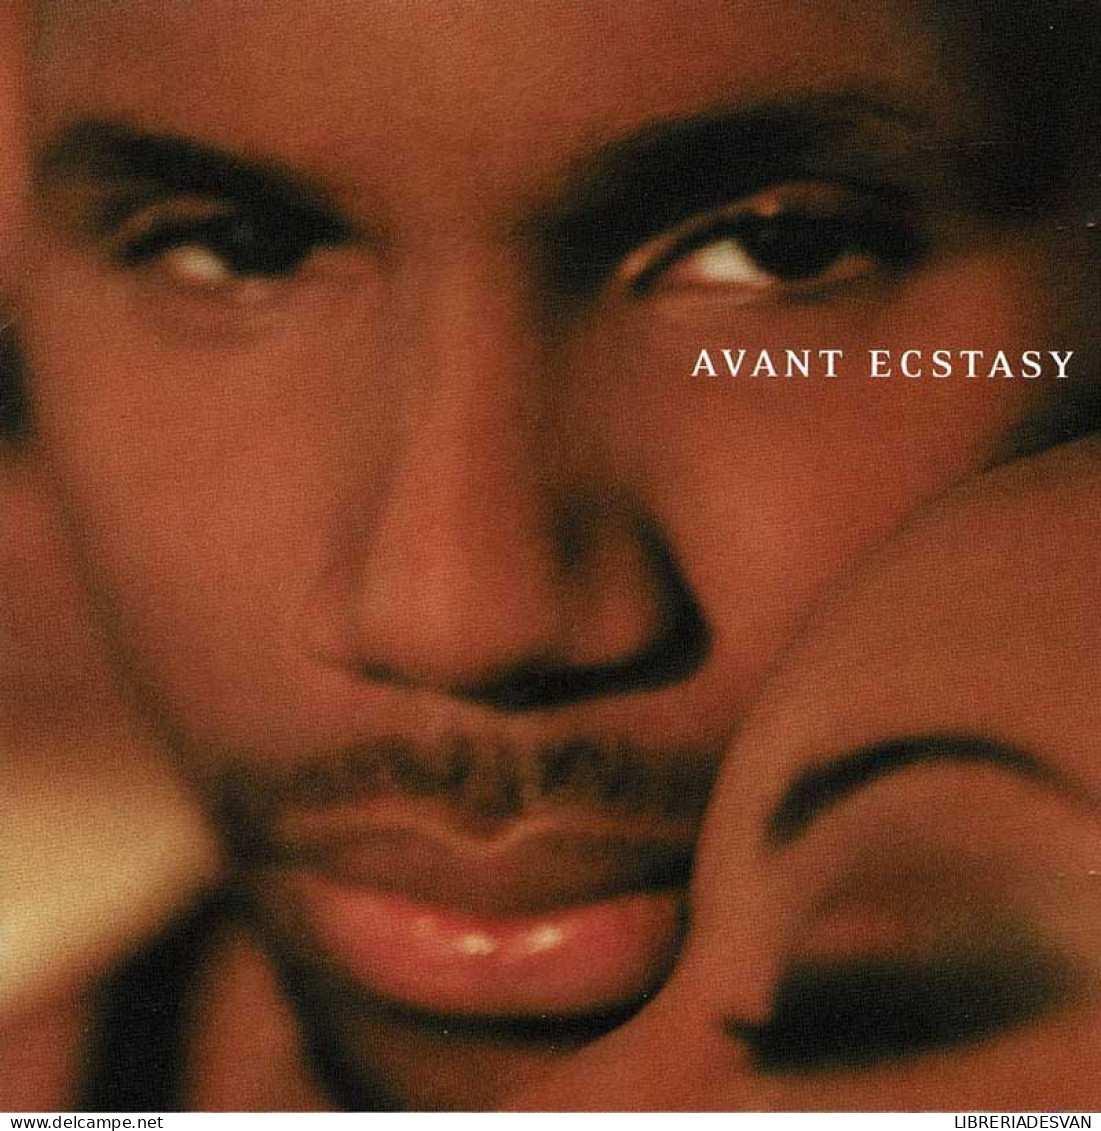 Avant - Ecstasy. CD - Jazz